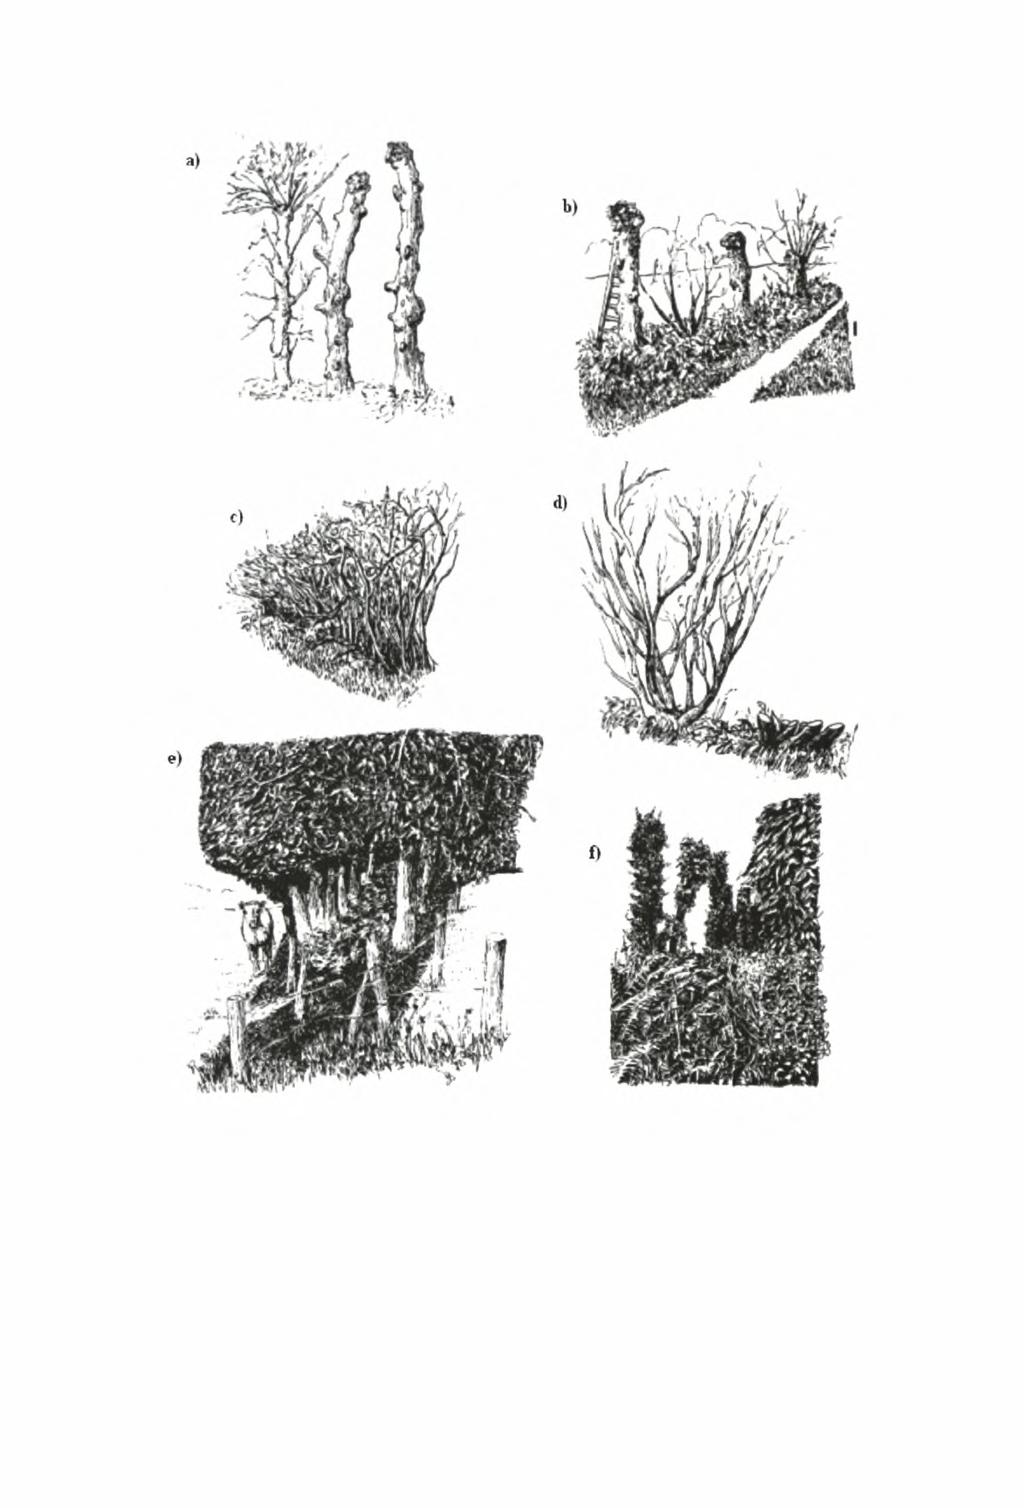 vn Εικόνα 4. Έξι παραδείγματα της ποικιλότητας των δομών των φυτοφραχτών, από Baudry et al (2000).